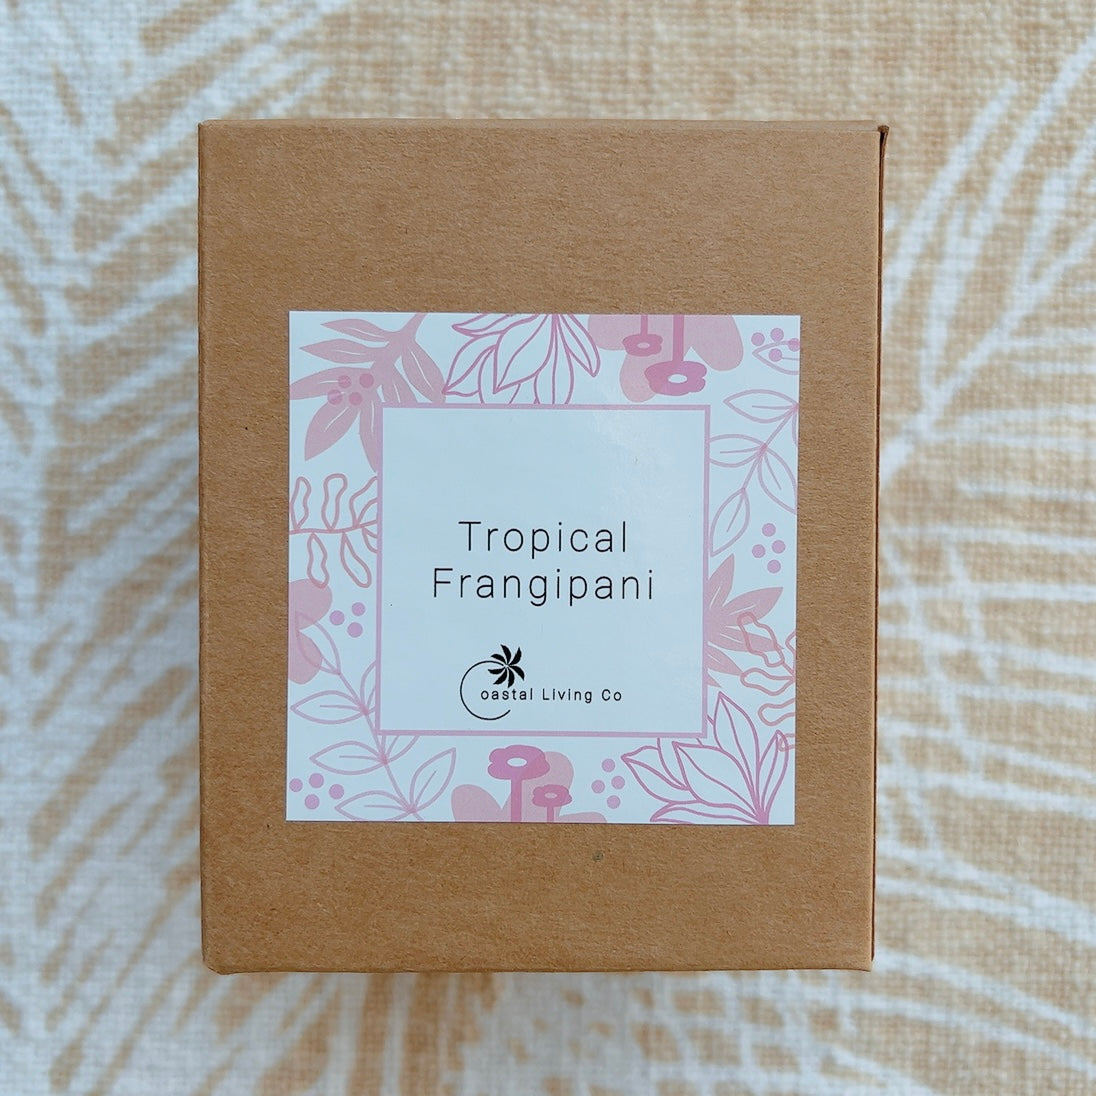 Tropical Frangipani Candle